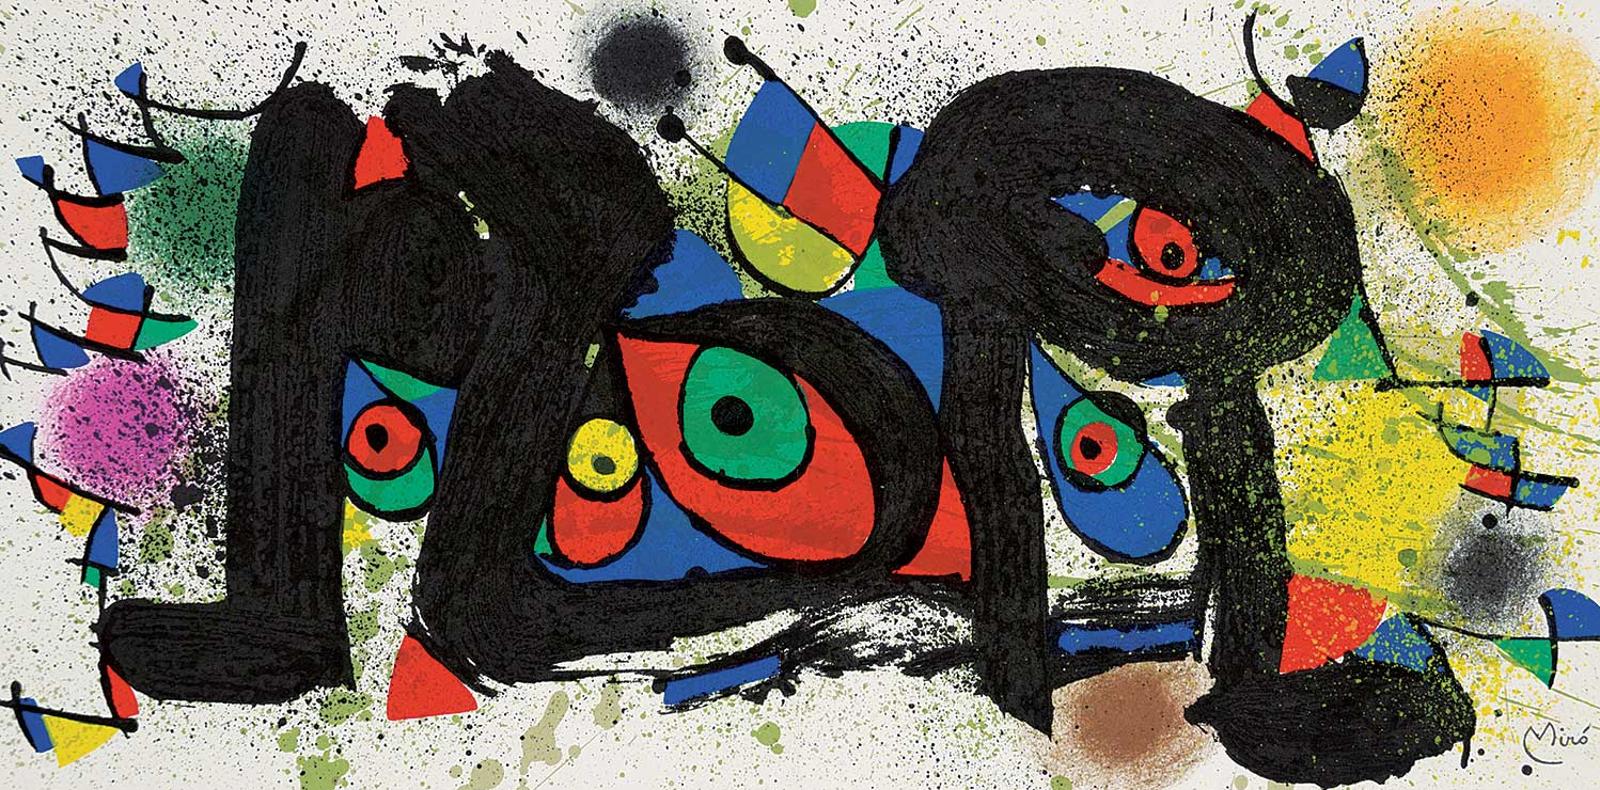 Joan Miró (1893-1983) - Untitled - Primary Figures